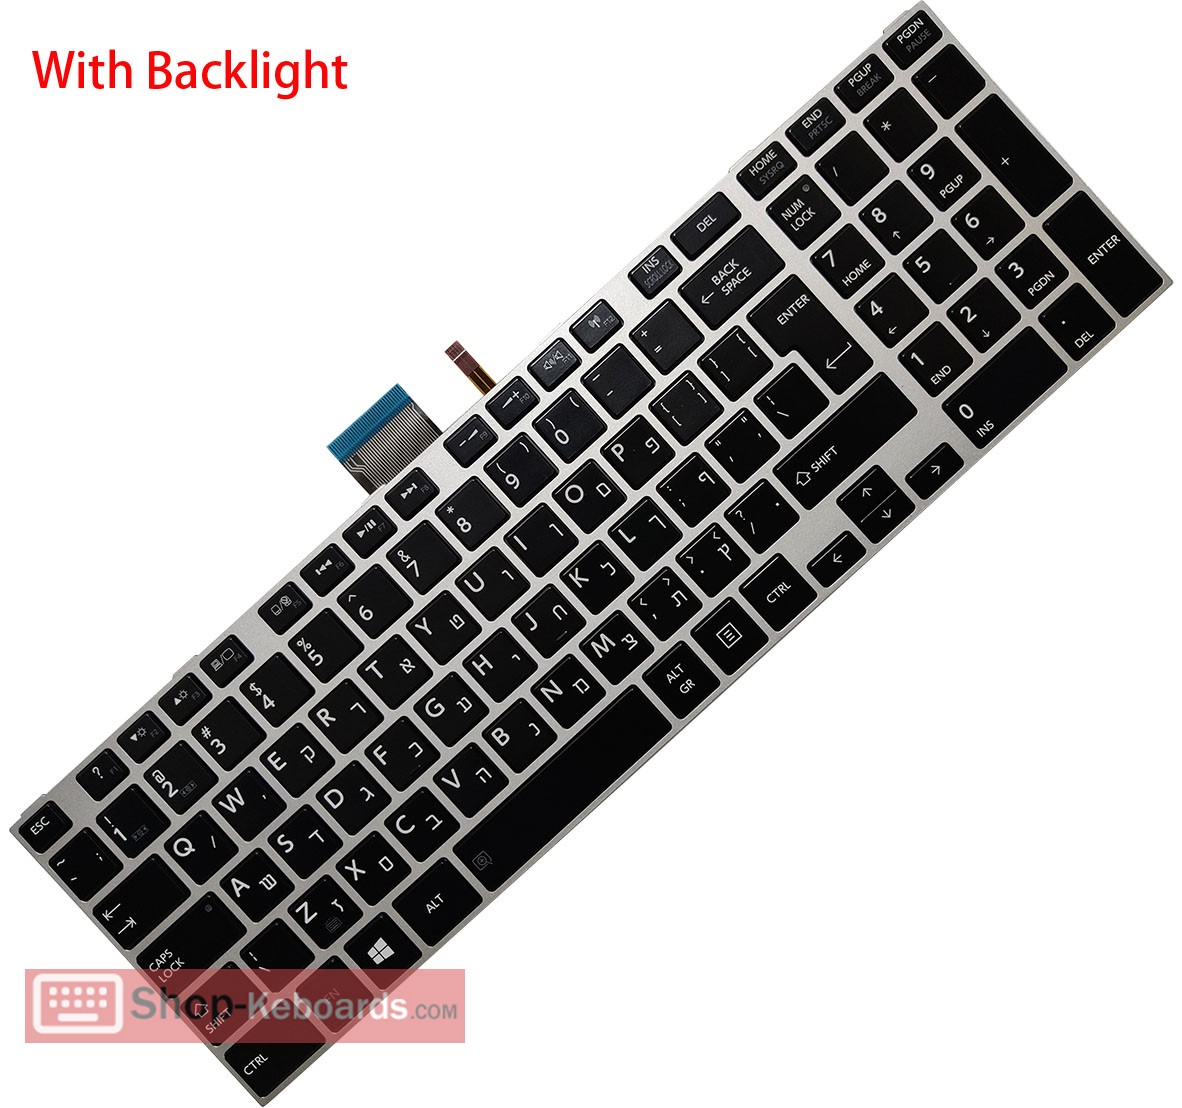 Toshiba NSK-TVMBU Keyboard replacement